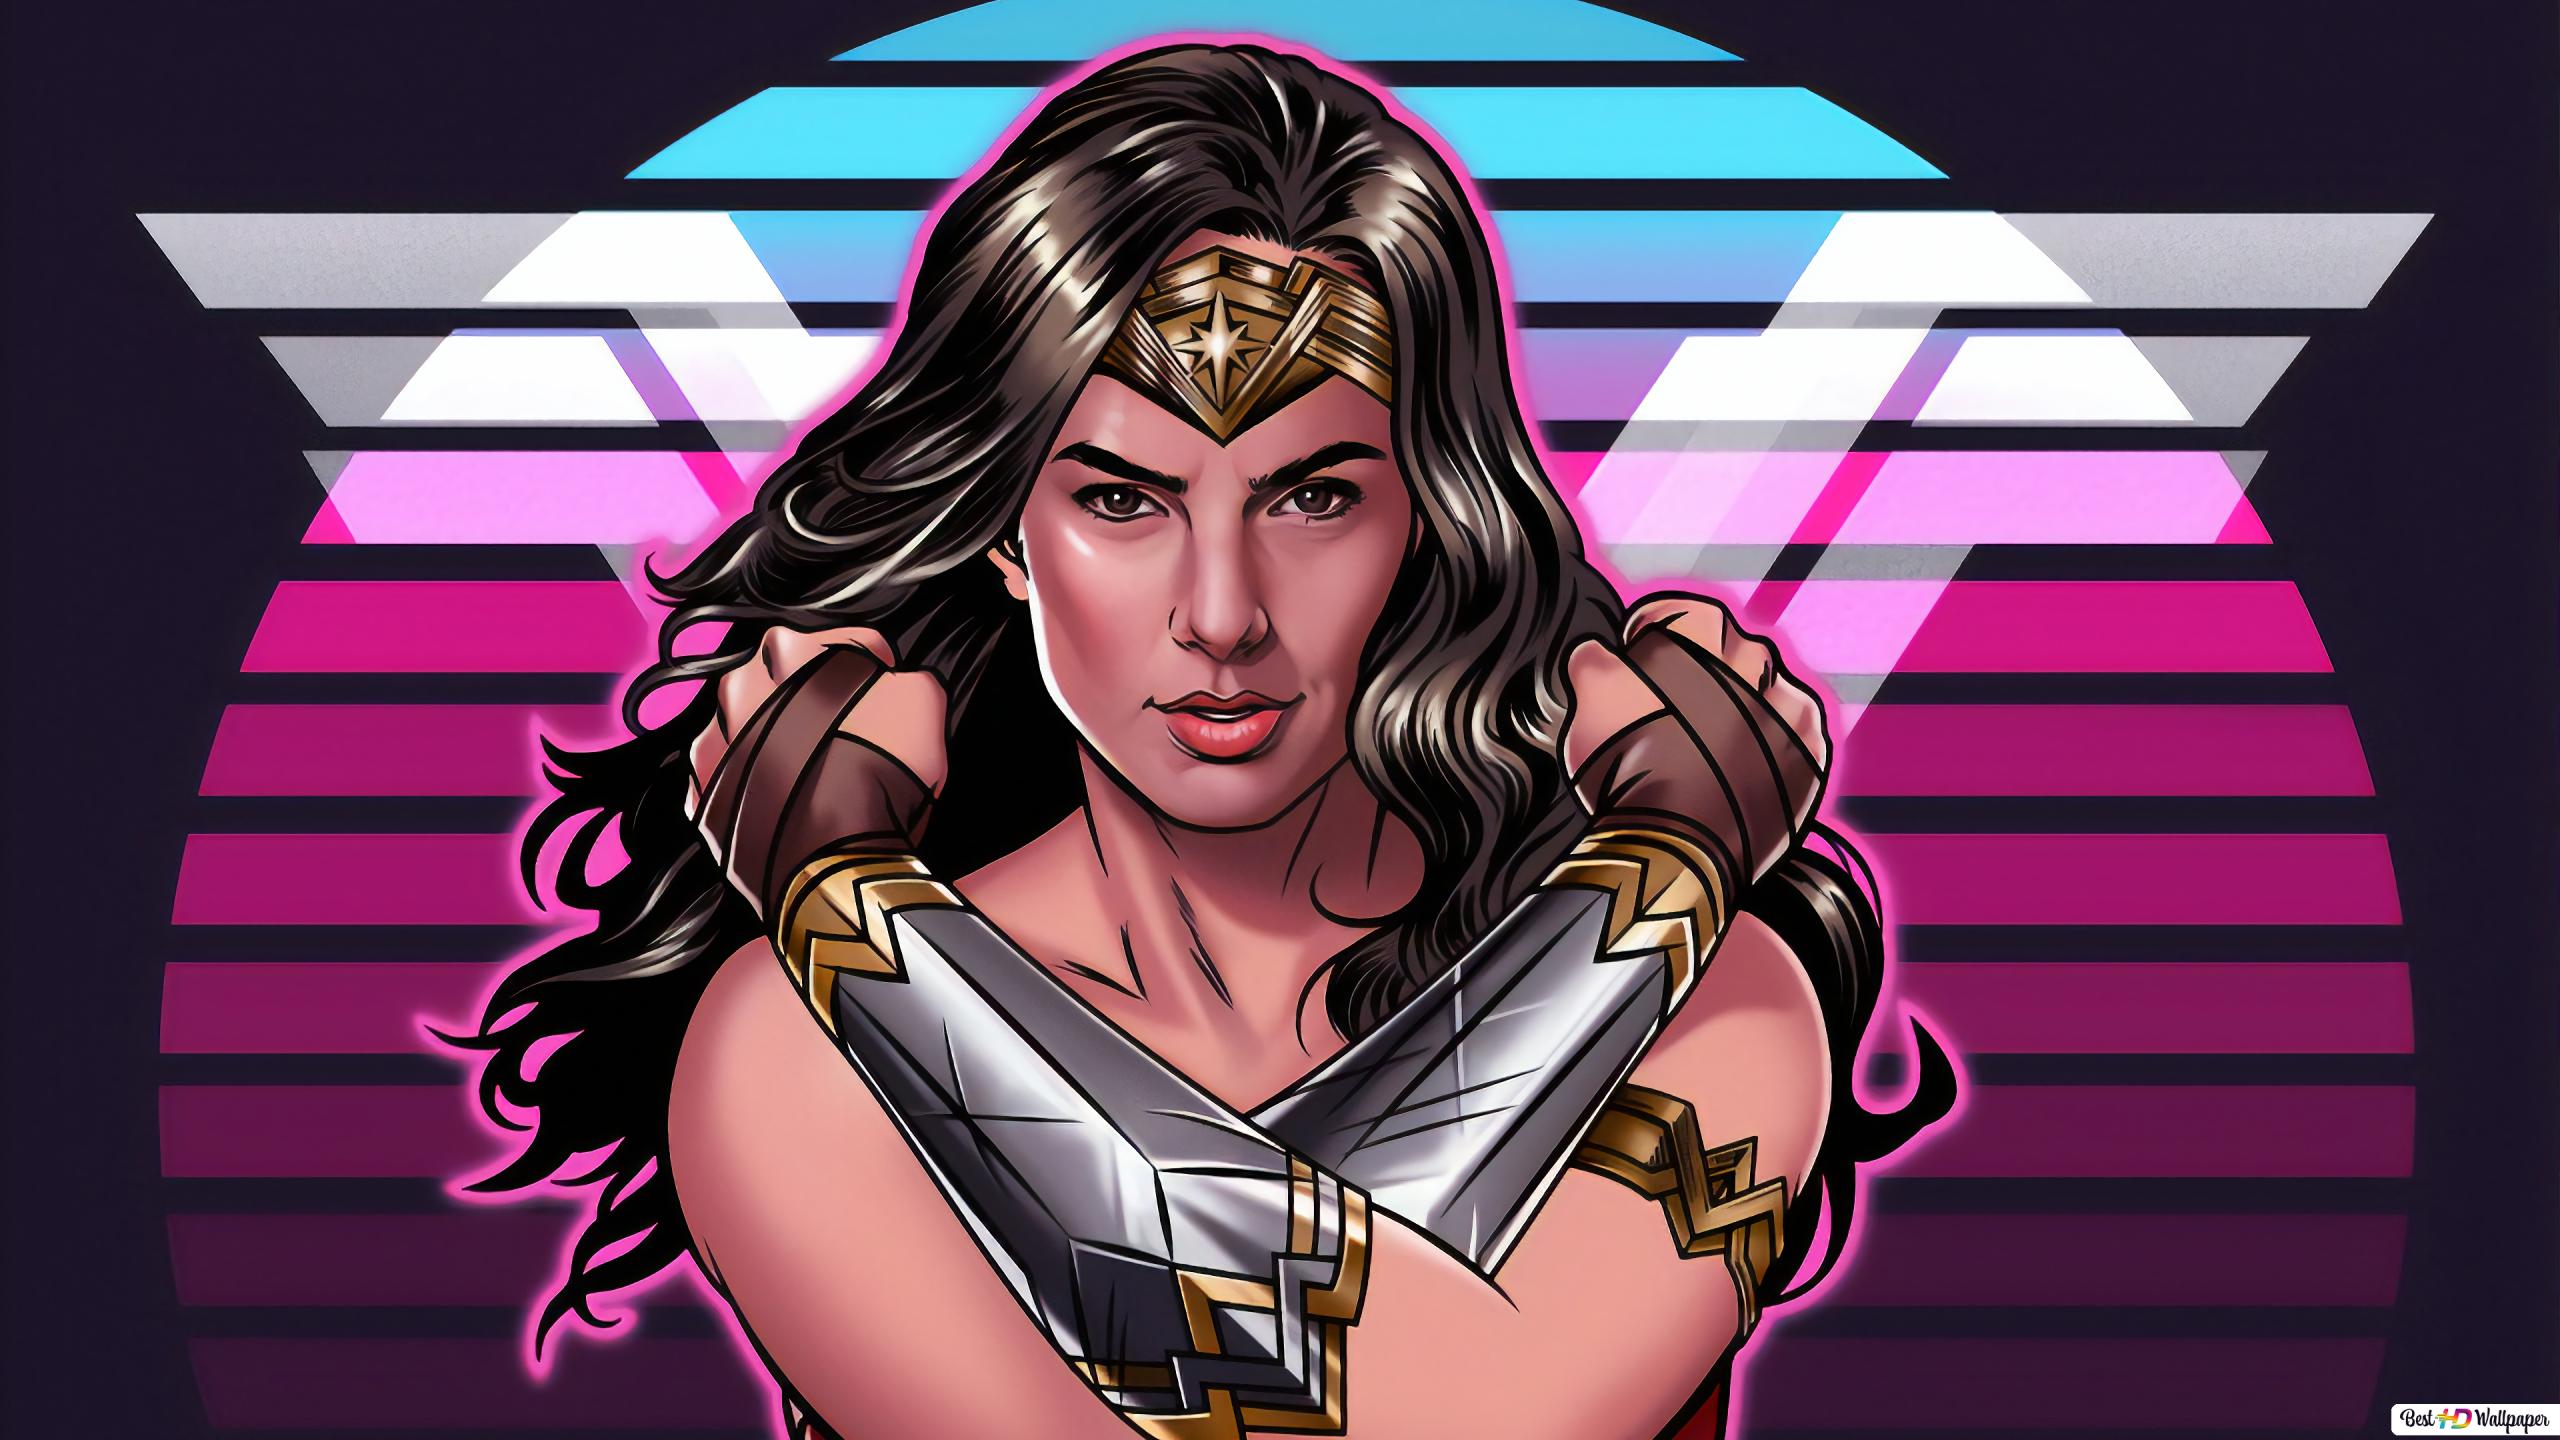 Wonder woman movie art HD wallpaper download